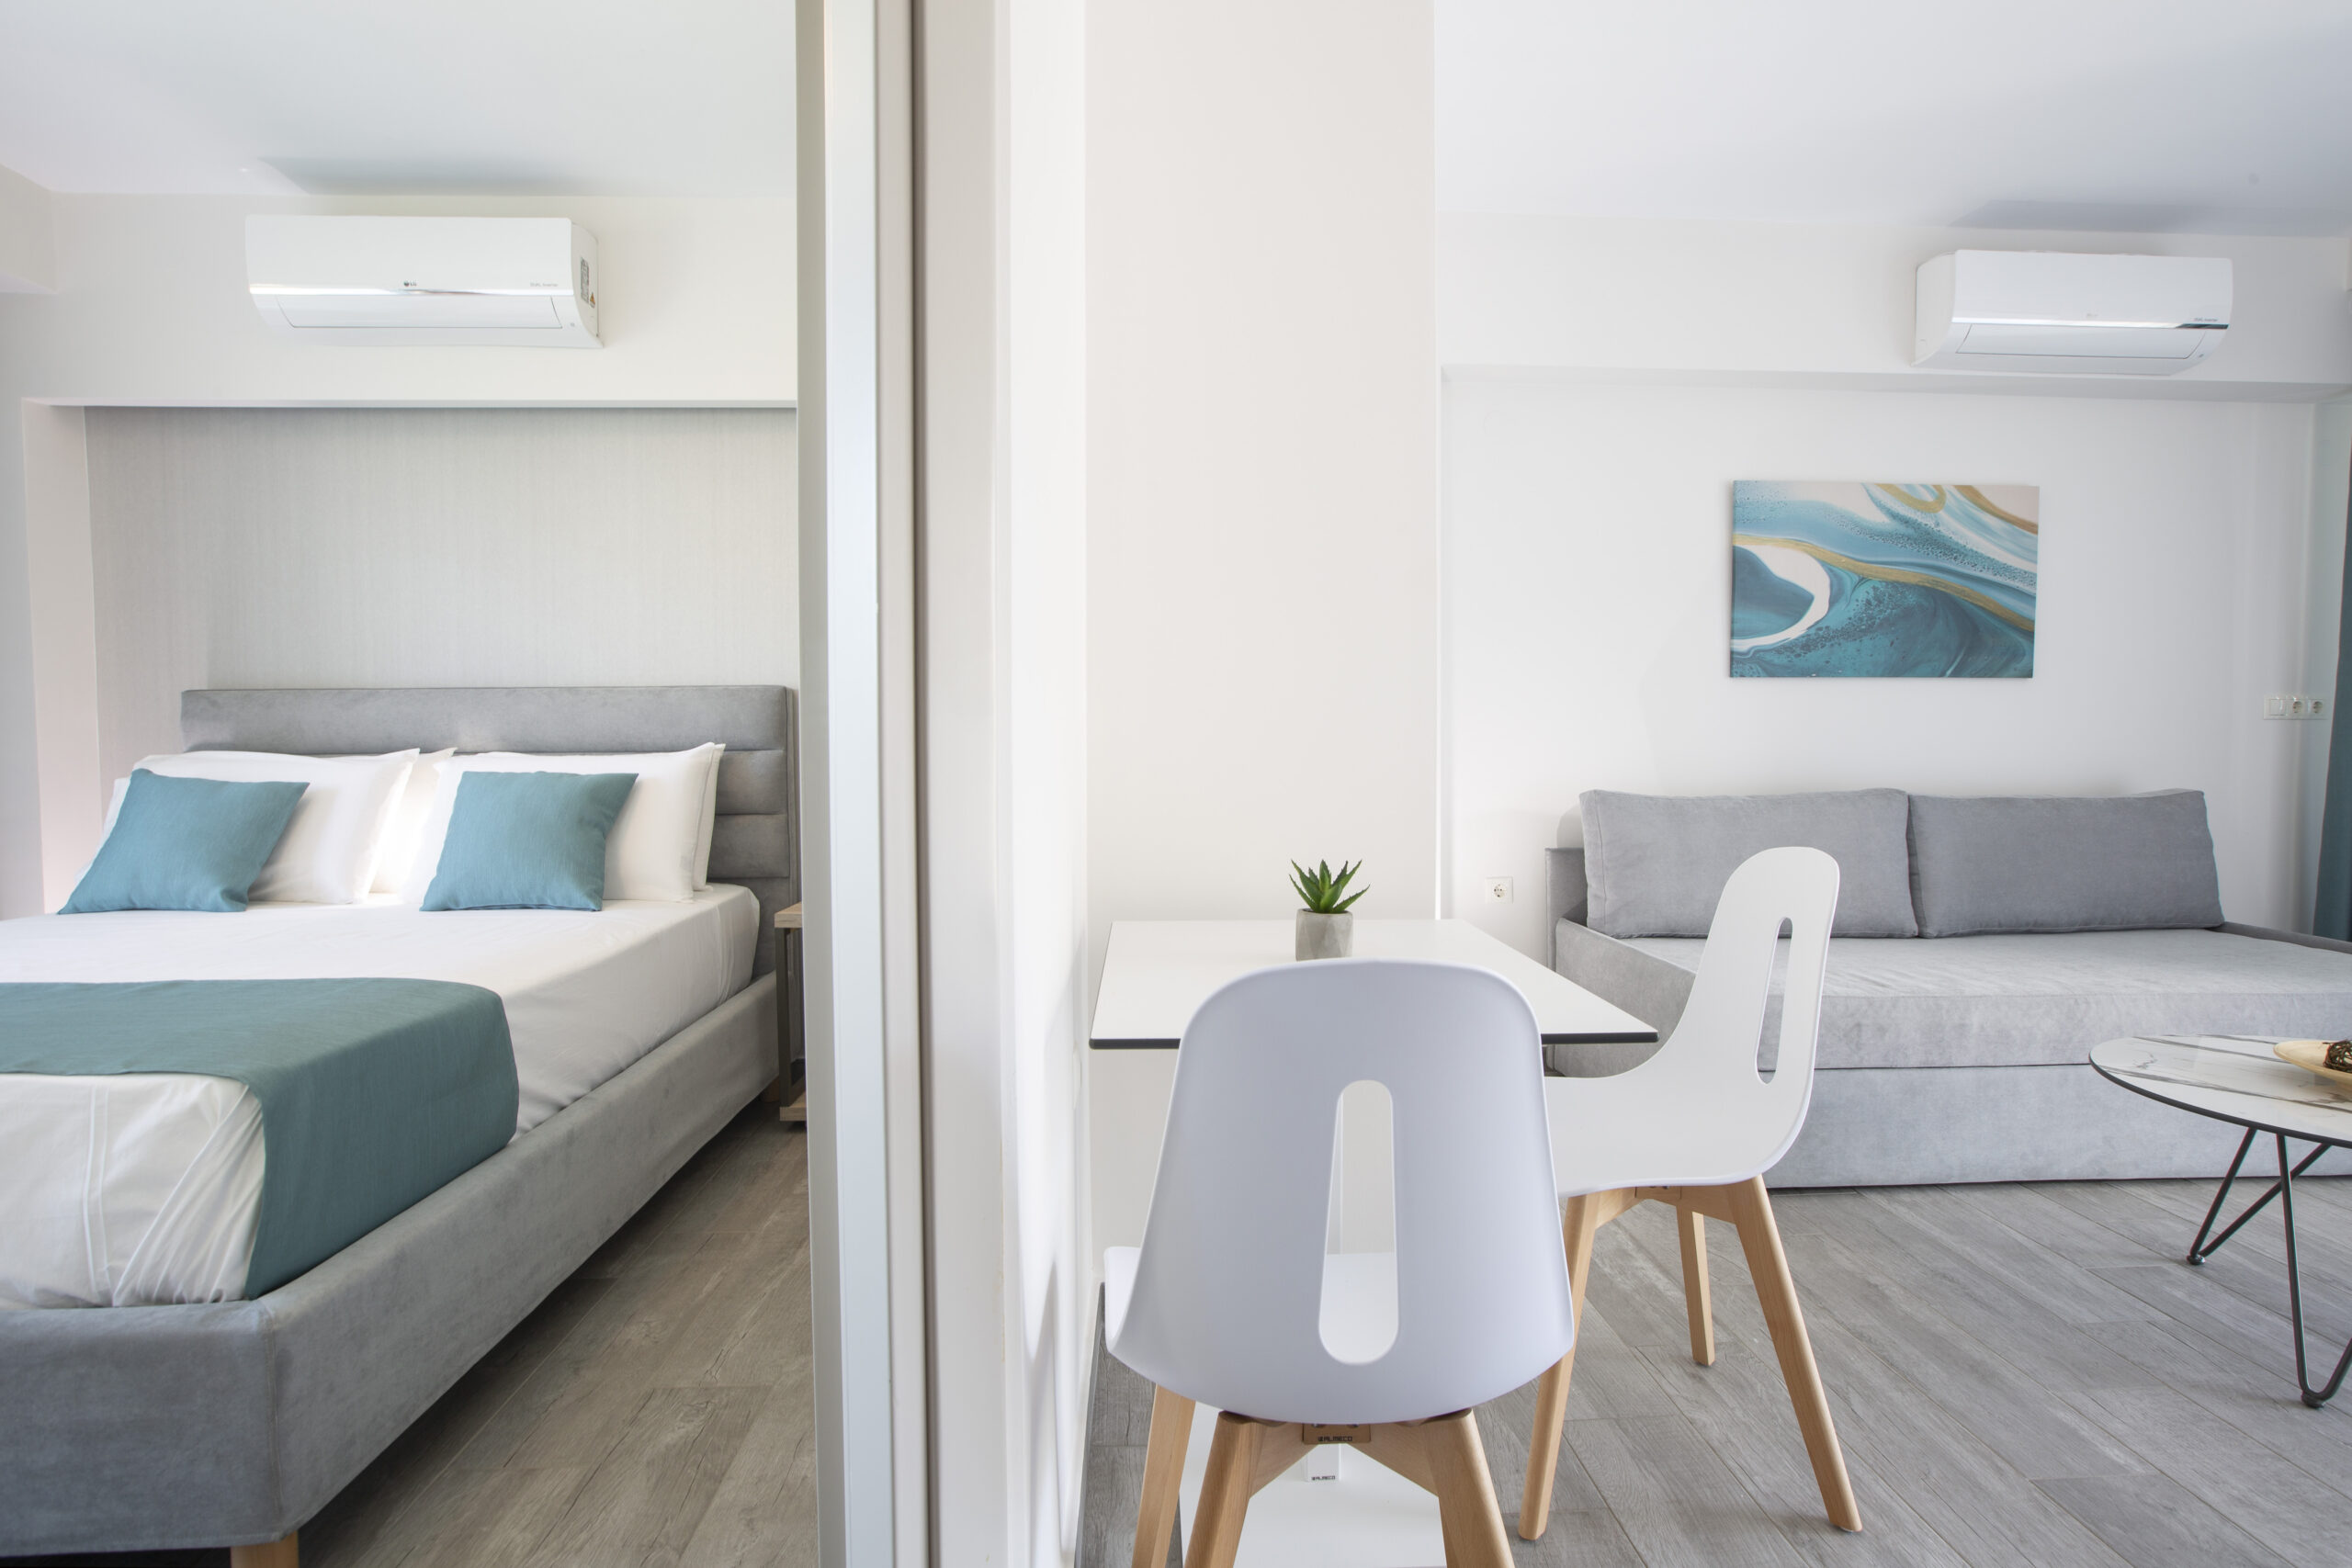 KN Ionian Suites One Bedroom Suite